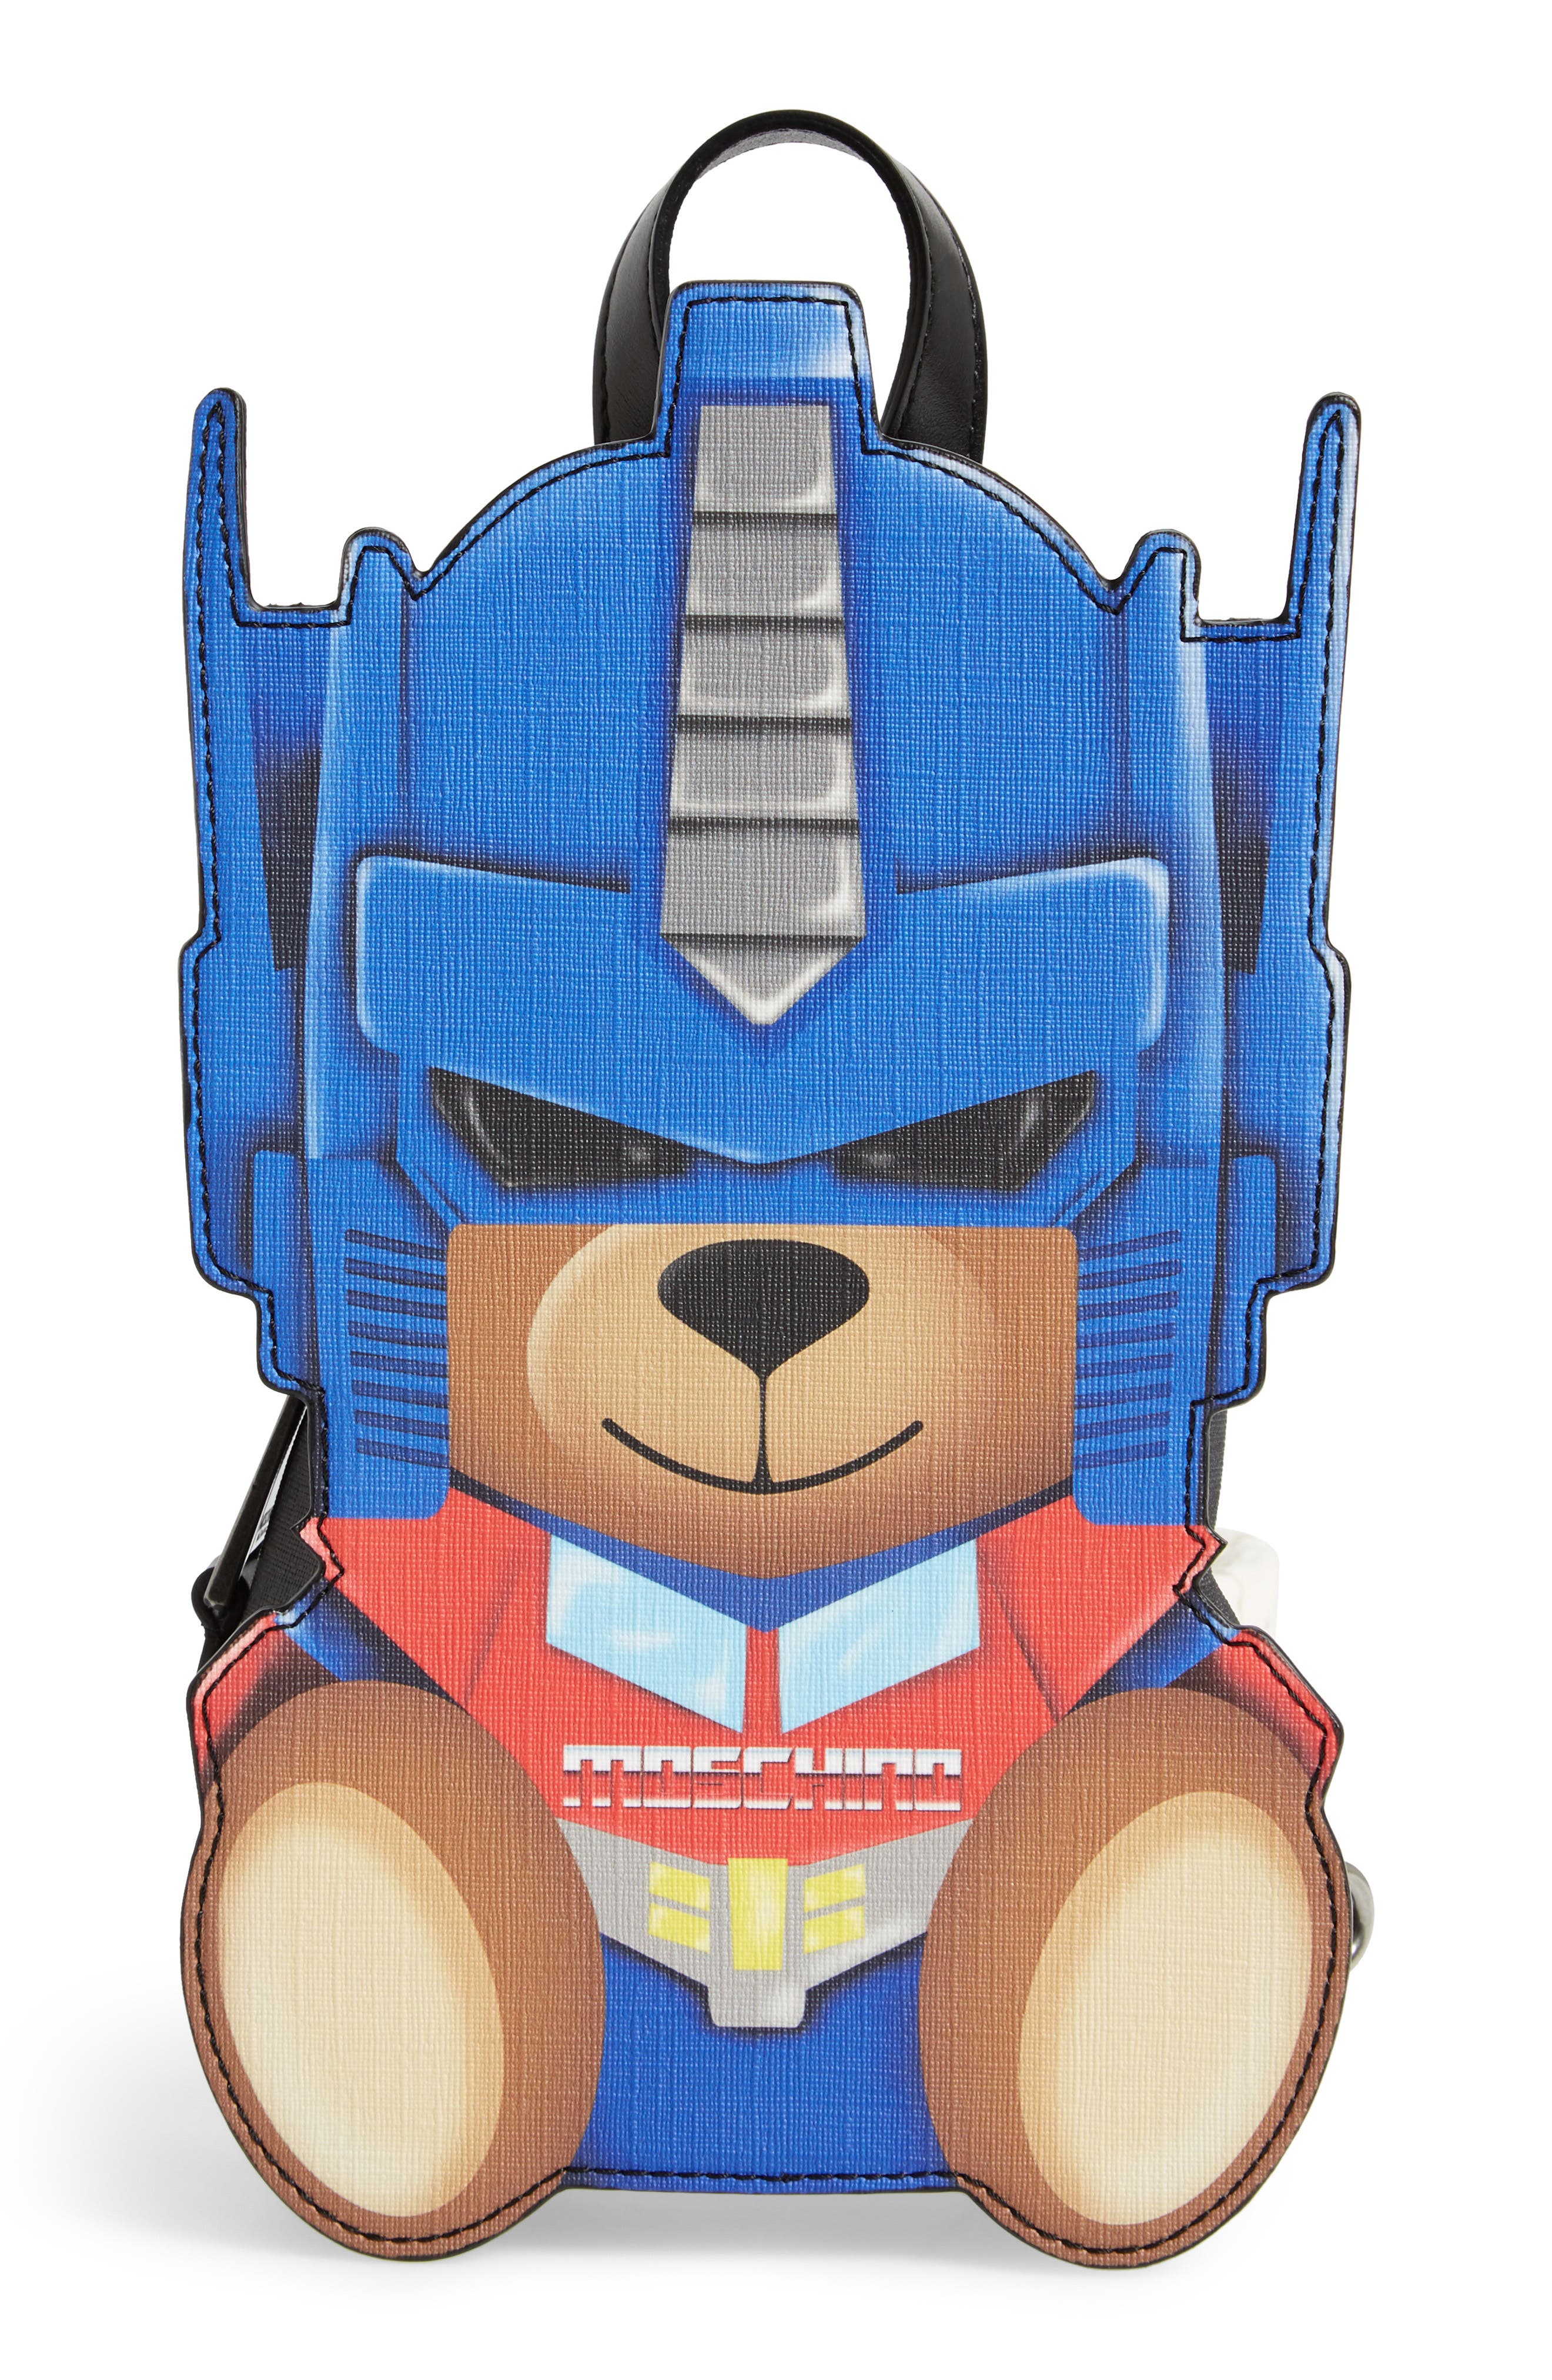 moschino transformer bear hoodie